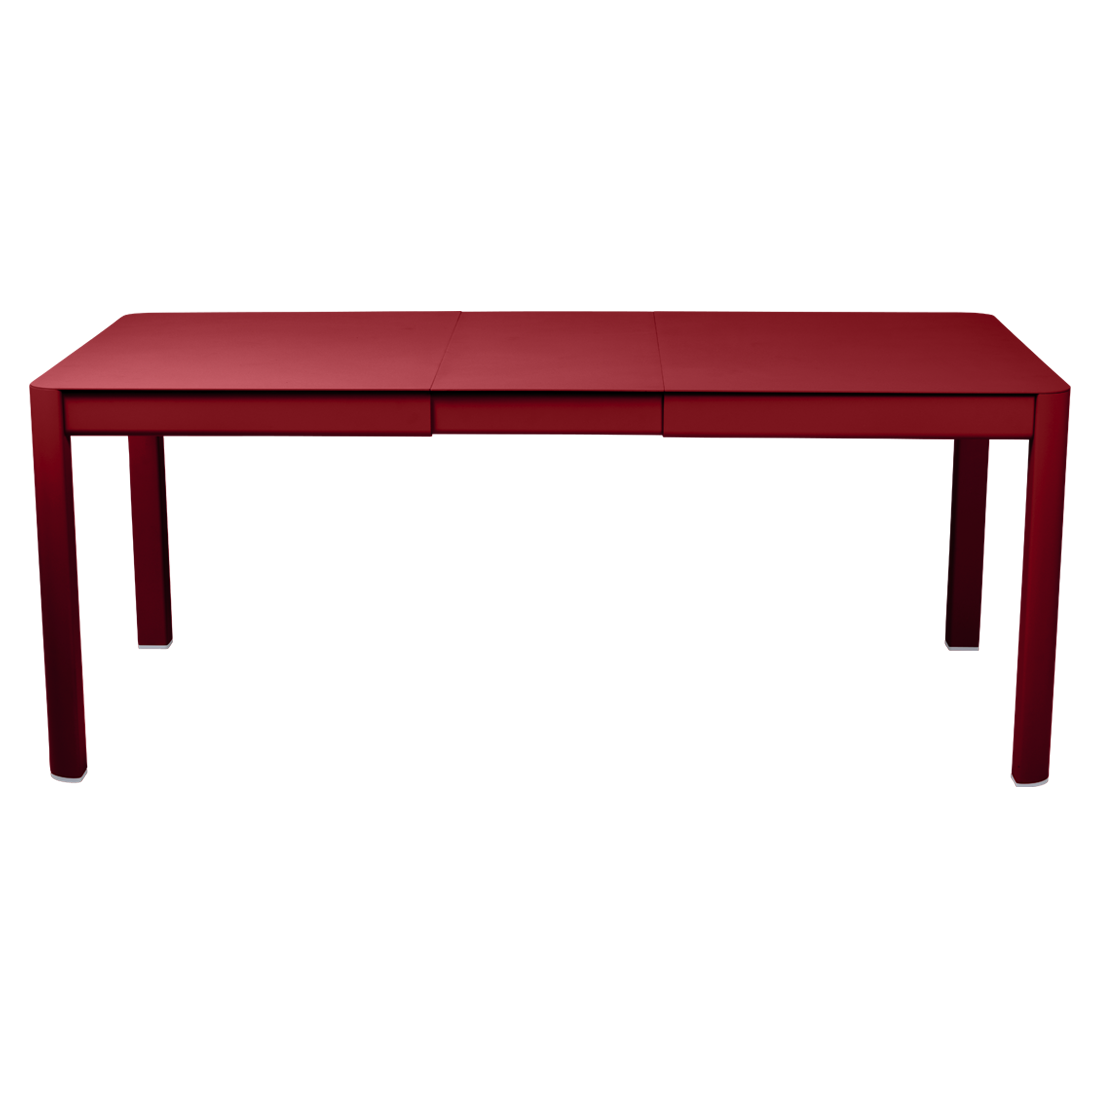 table de jardin rouge, table metal allonge, table metal a rallonge, table metal rectangulaire, table fermob allonge